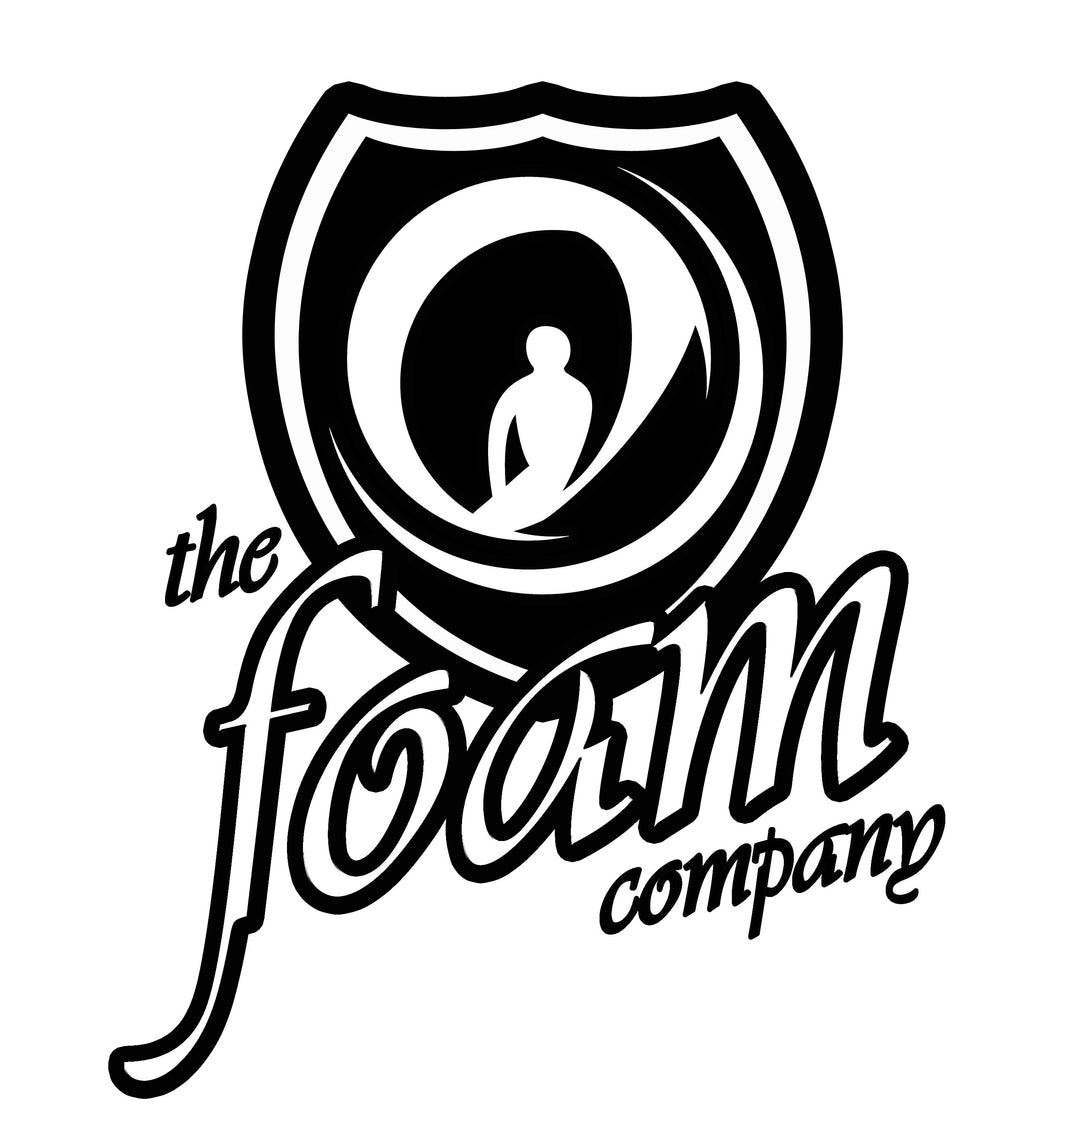 Foam Company Shield Sticker